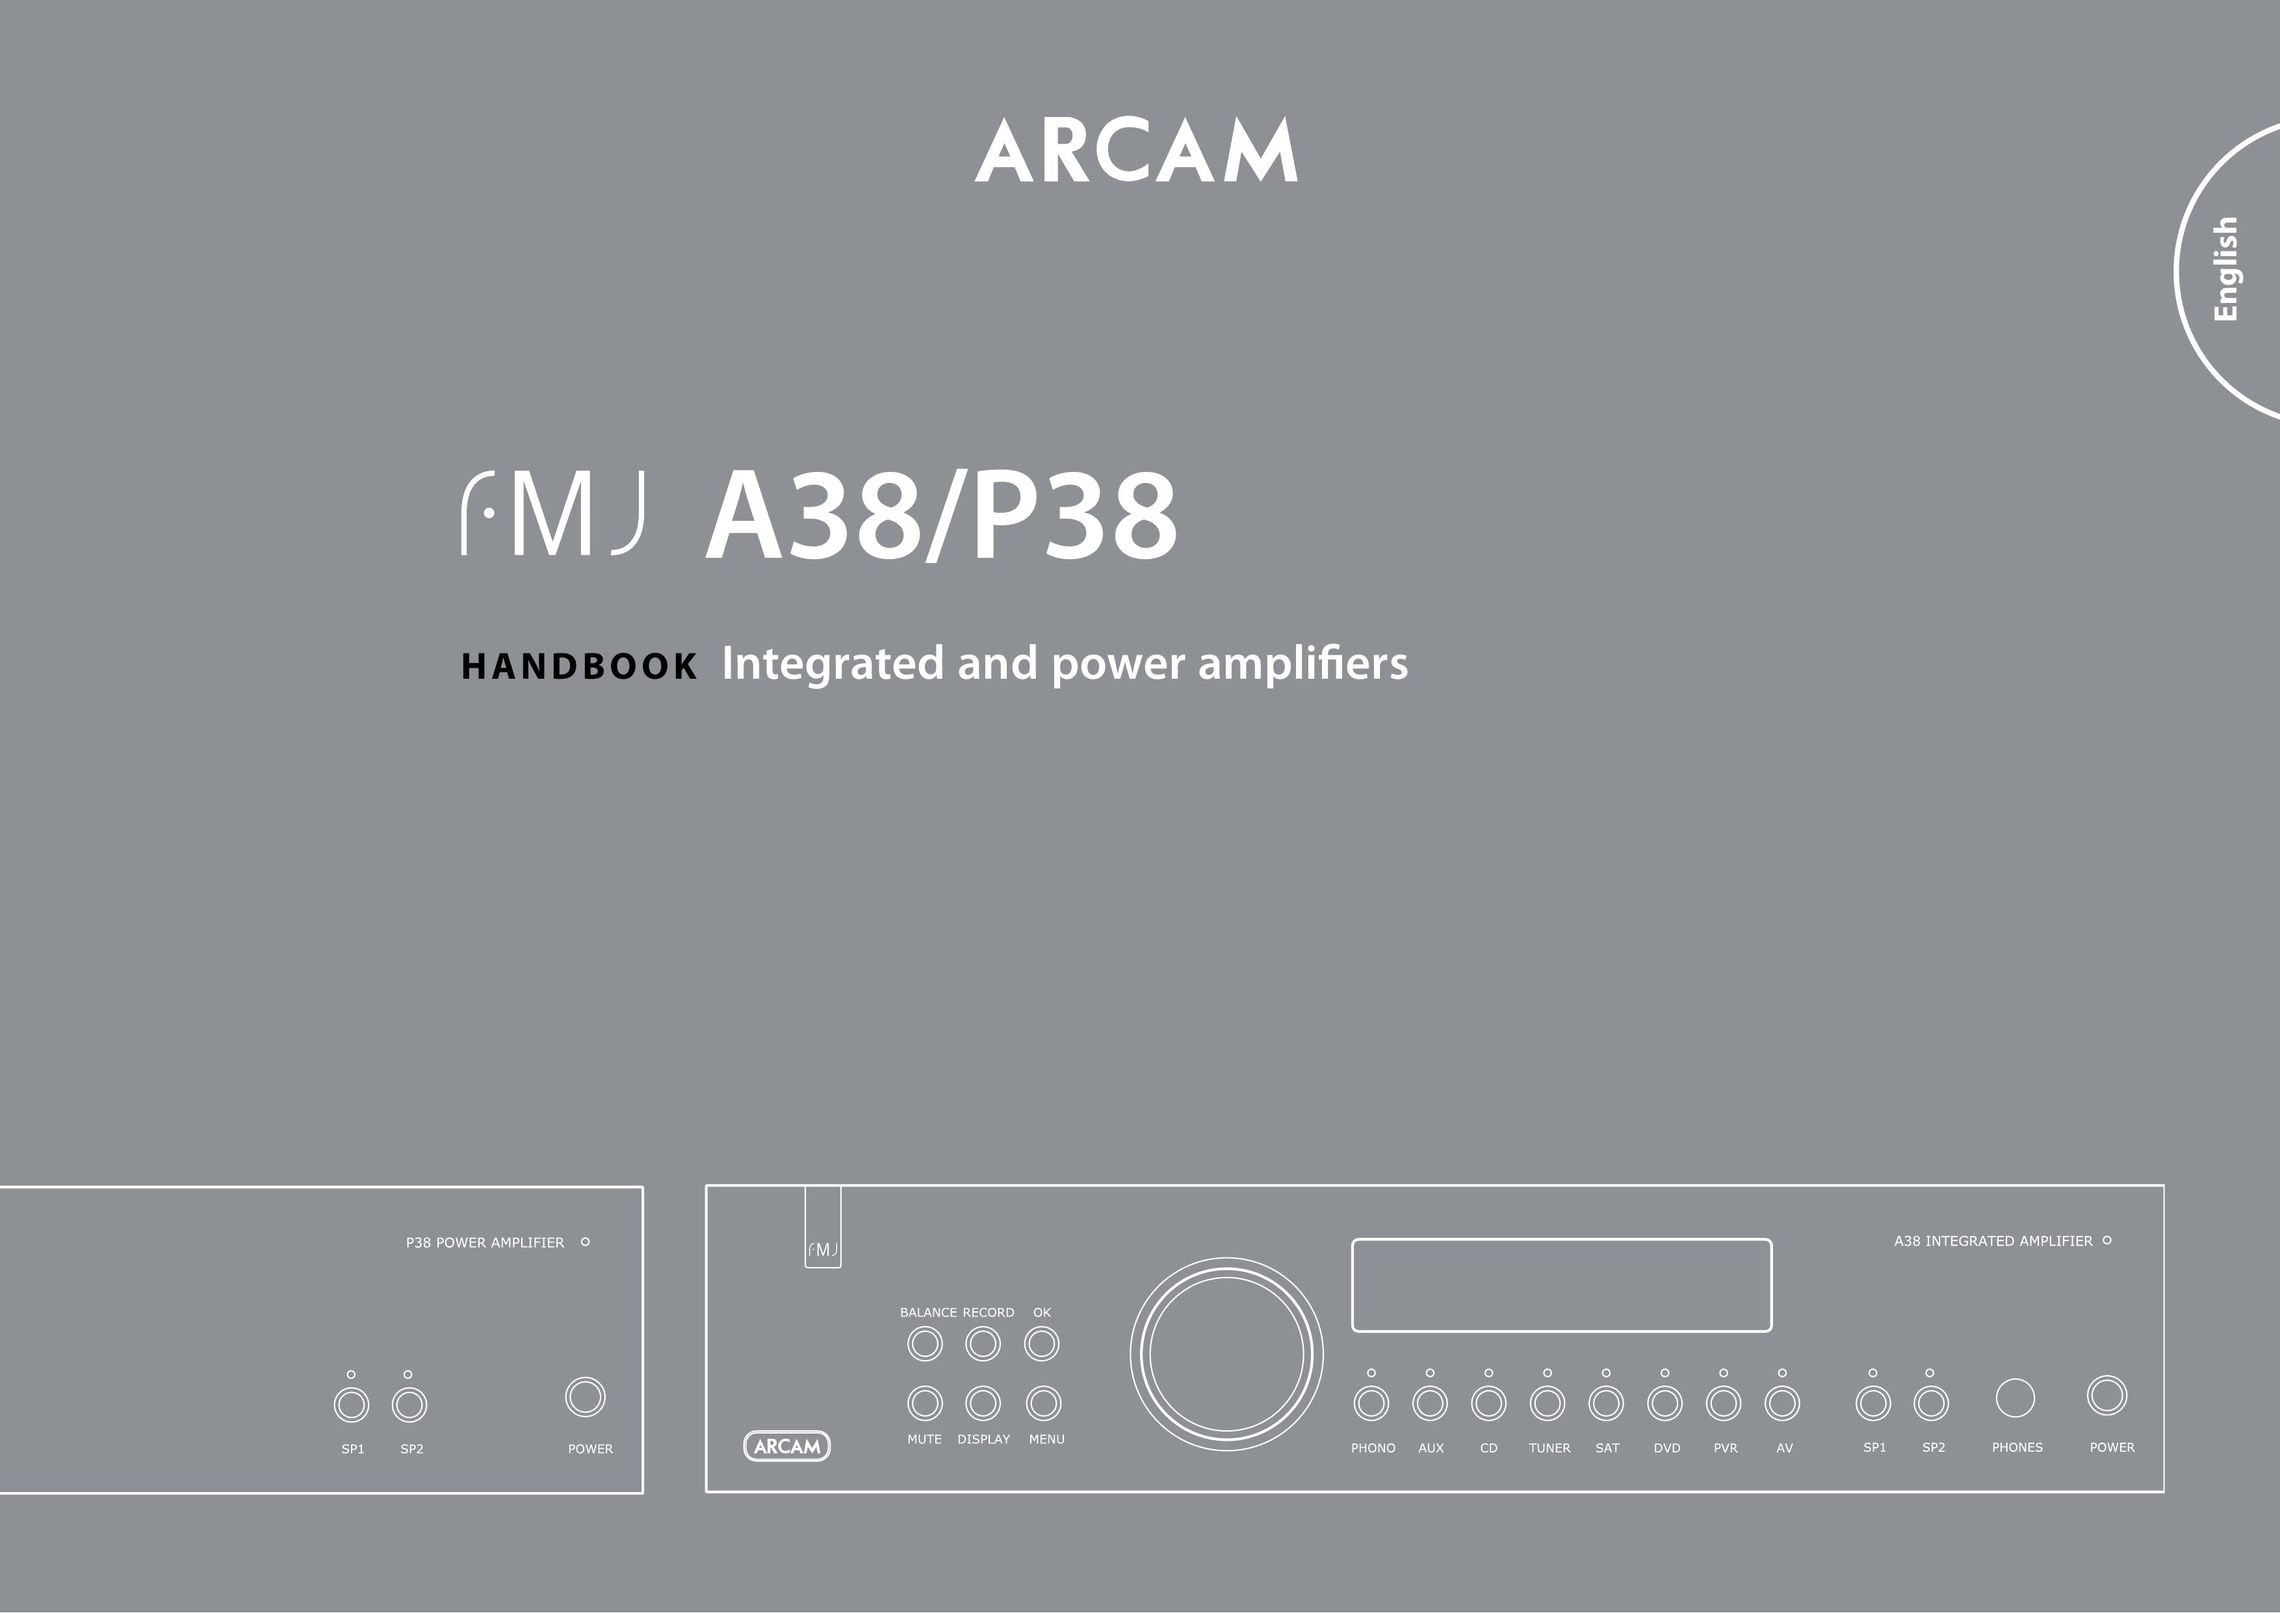 Arcam P38 Cell Phone User Manual